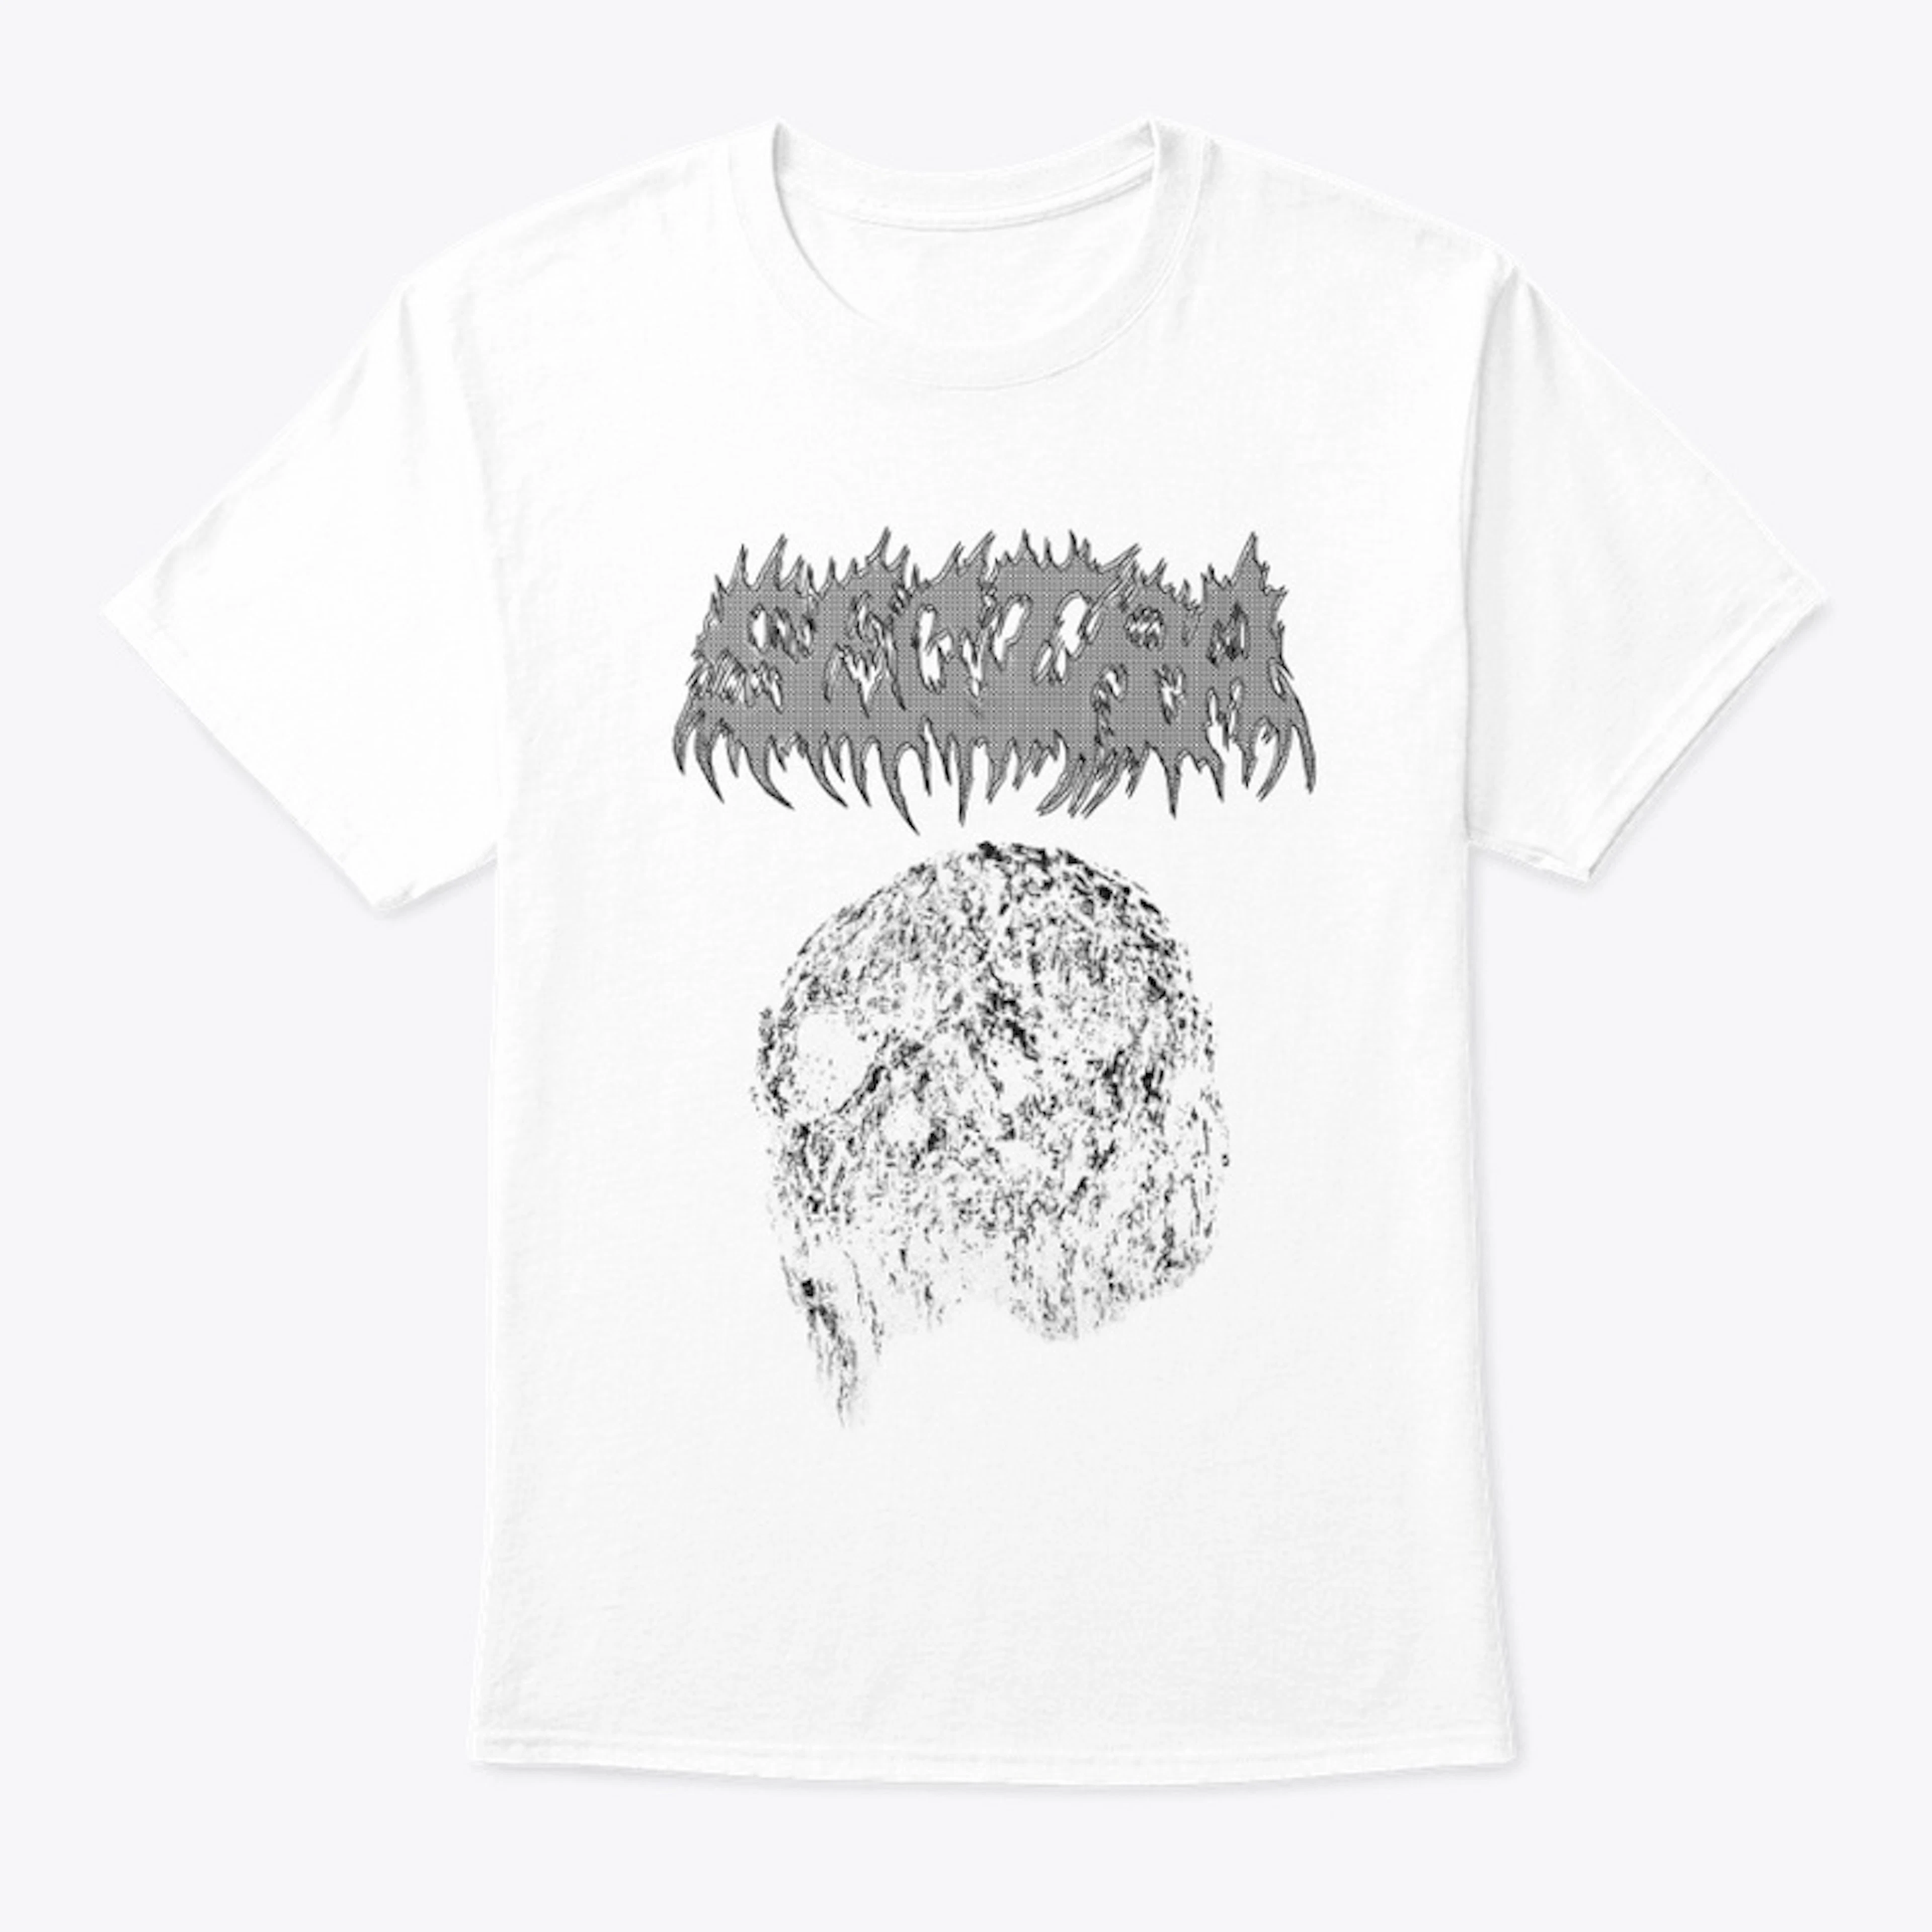 "Death Metal" Shirt 2